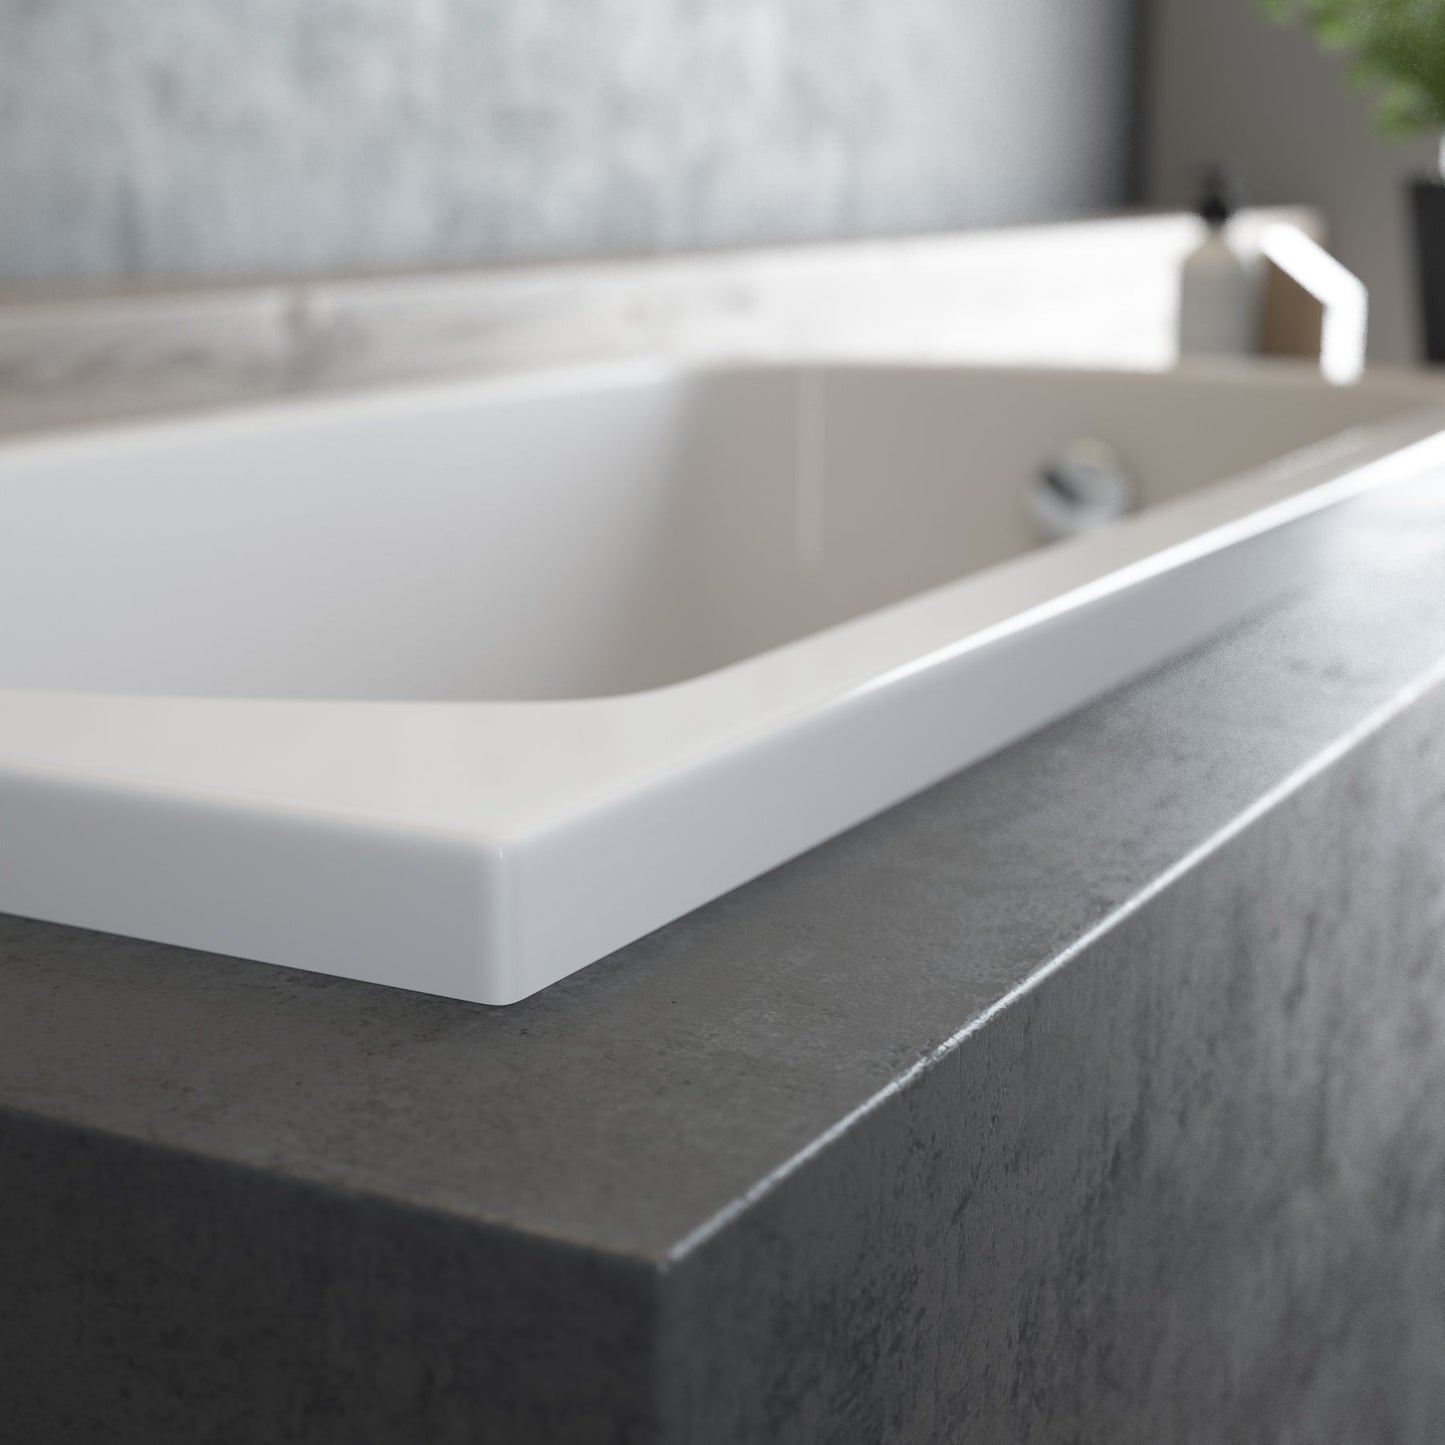 Acrylic rectangular bathtub CLASSIC